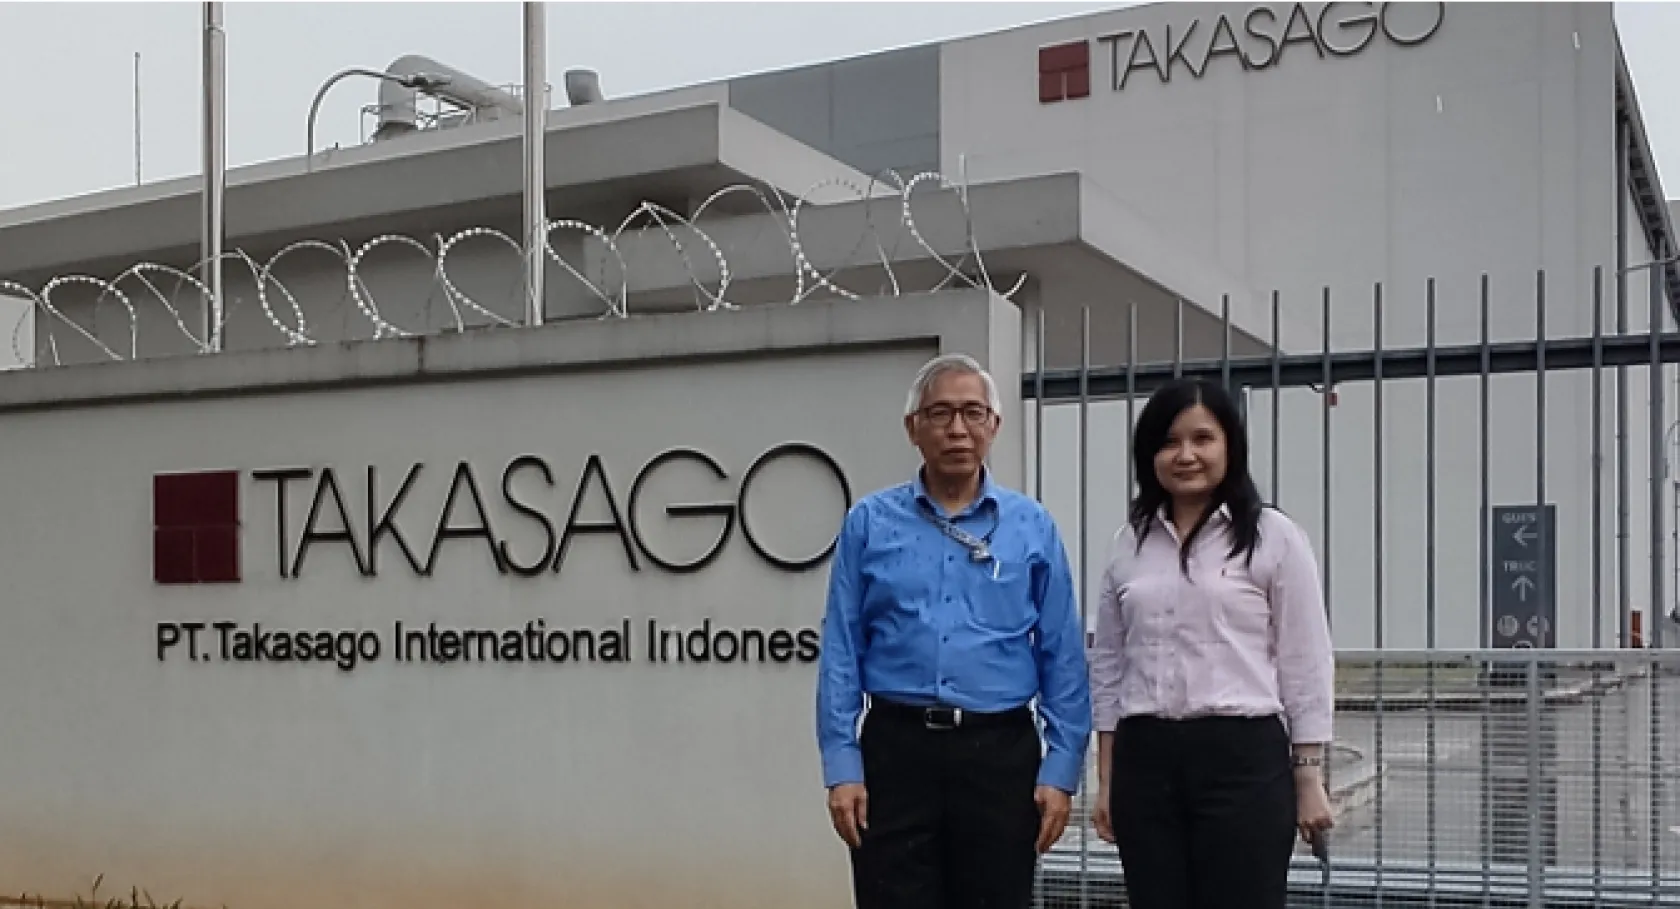 PT. Takasago International Indonesia 工場にて